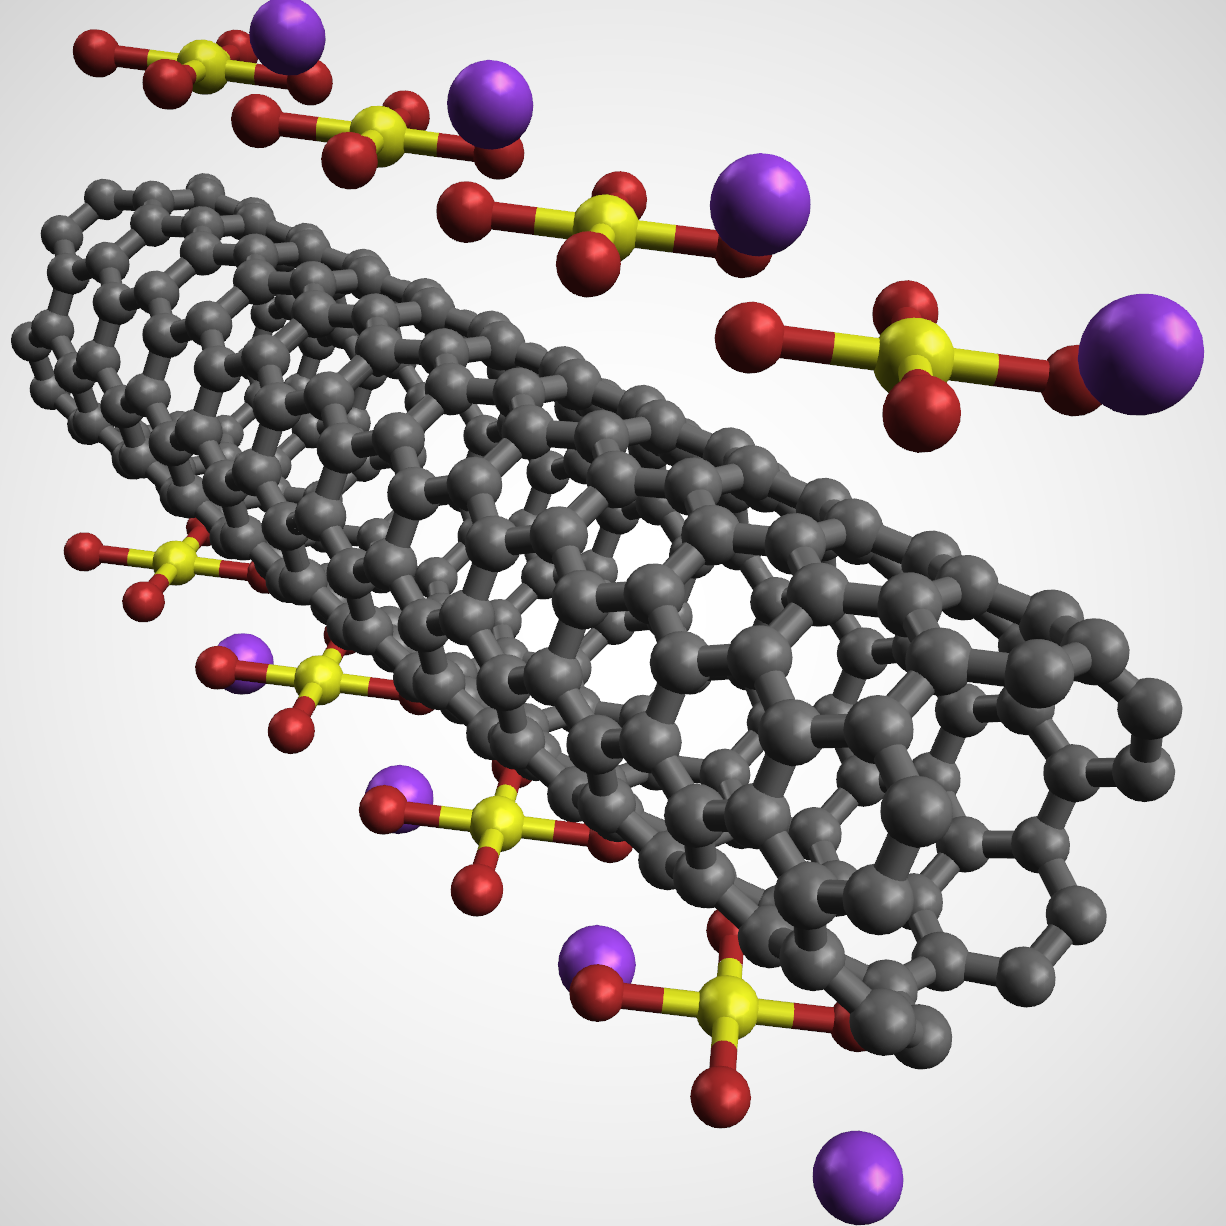 A (5,5) metallic single-walled carbon nanotube doped with potassium tetrabromoaurate (KAuBr4) molecule